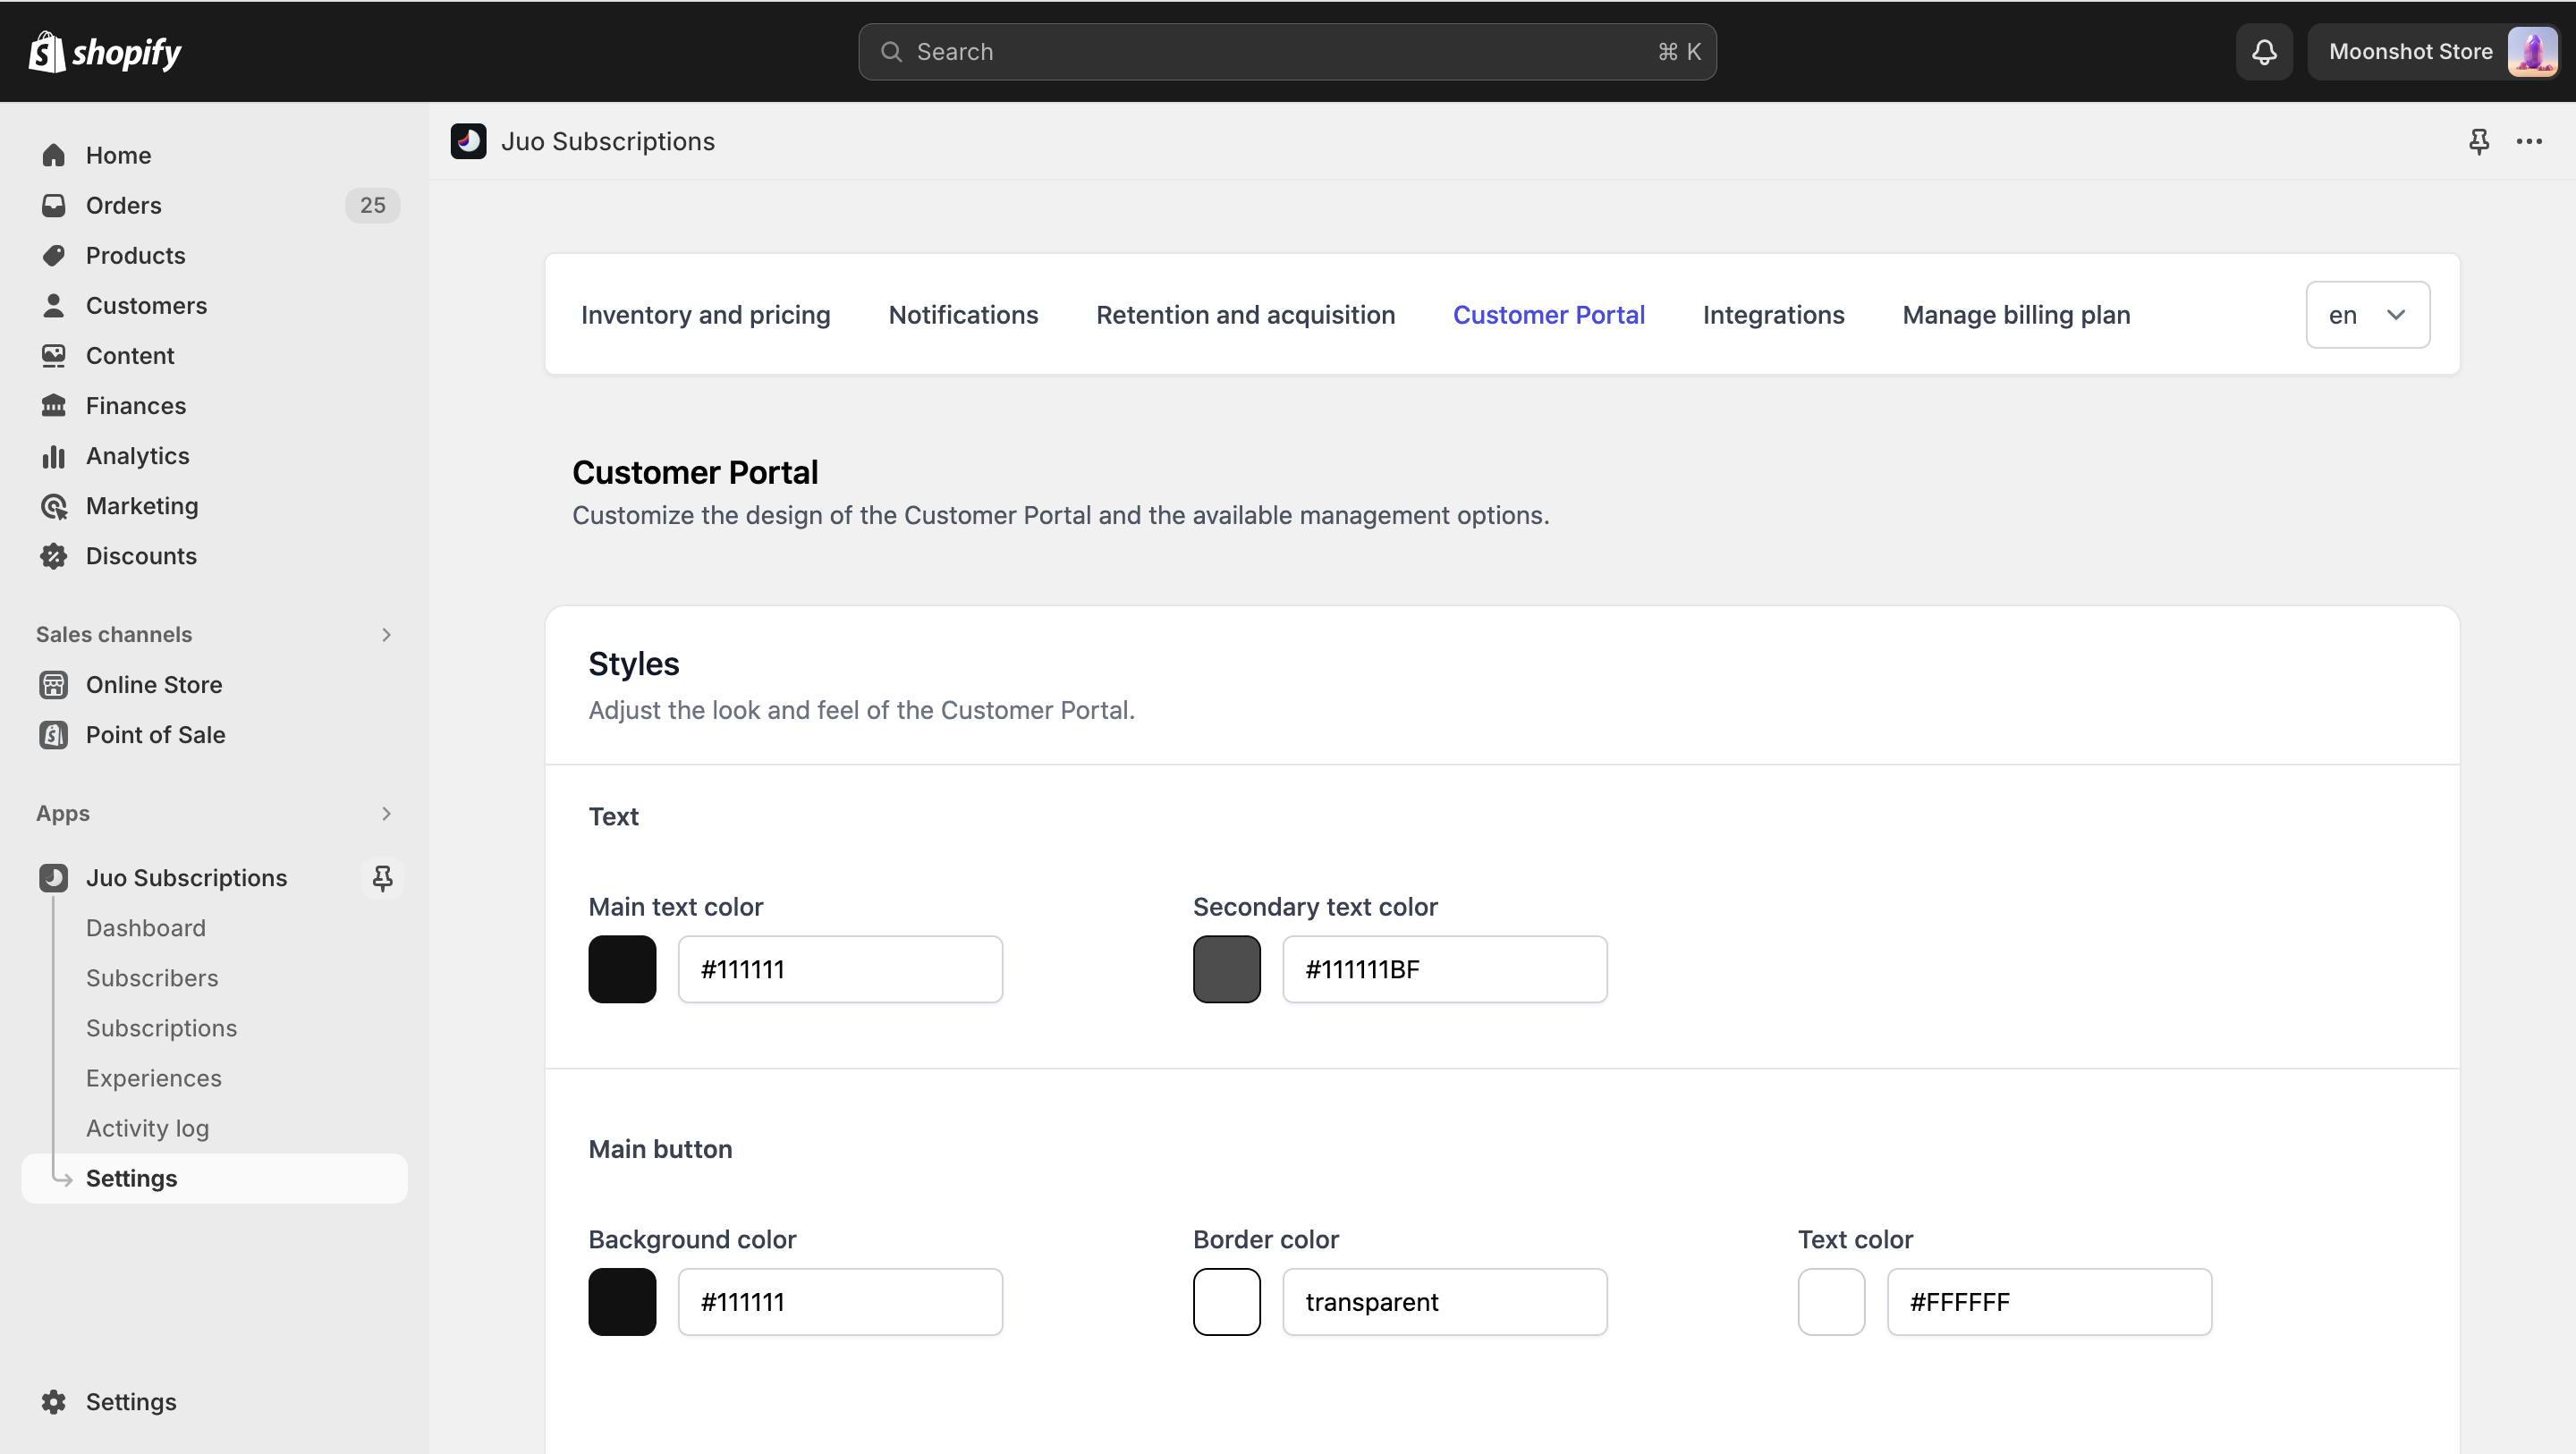 Global settings view - Customer Portal